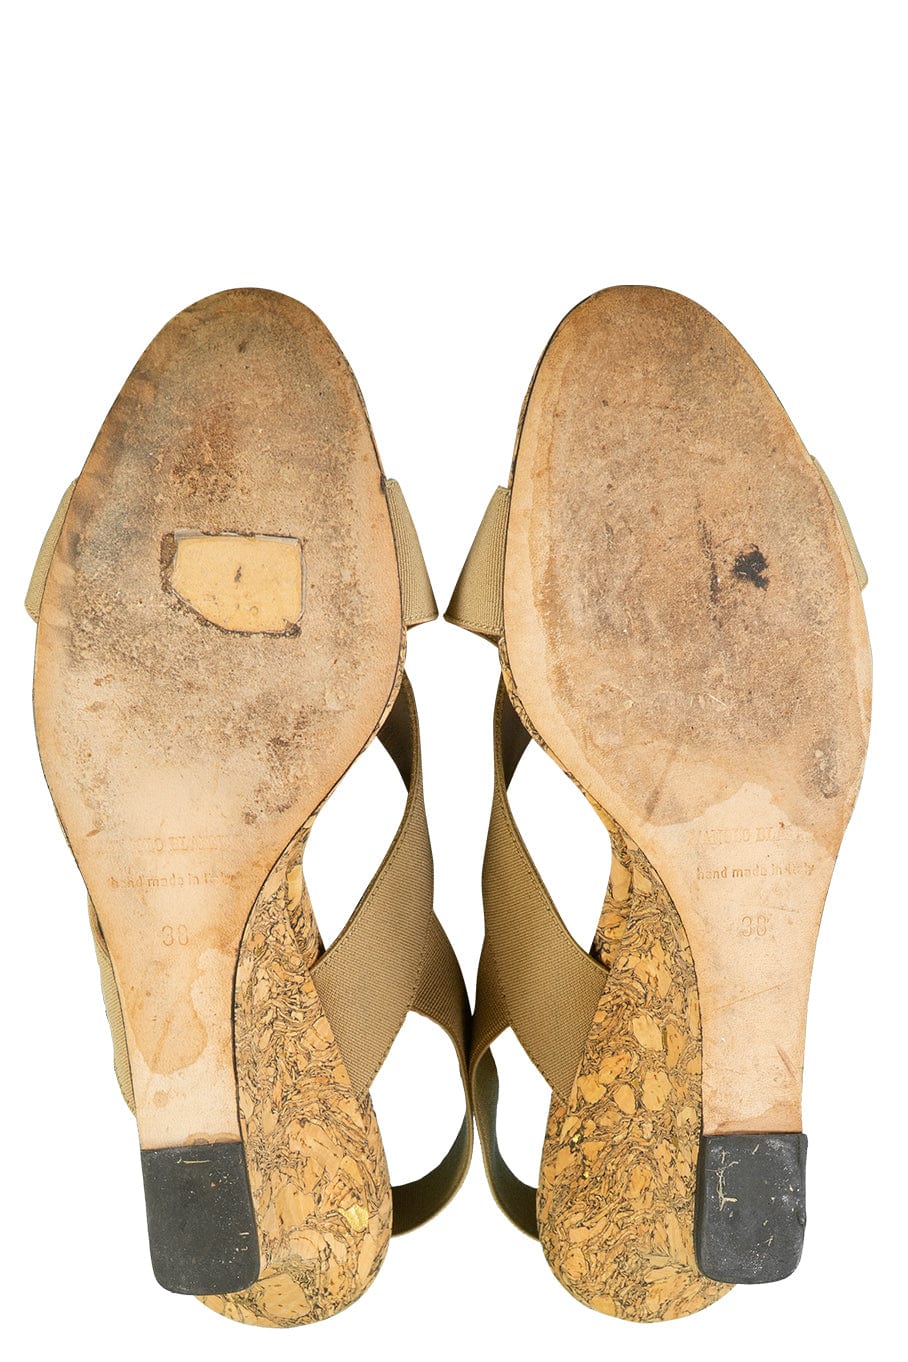 MANOLO BLAHNIK-Cork Wedge Sandal-TAN